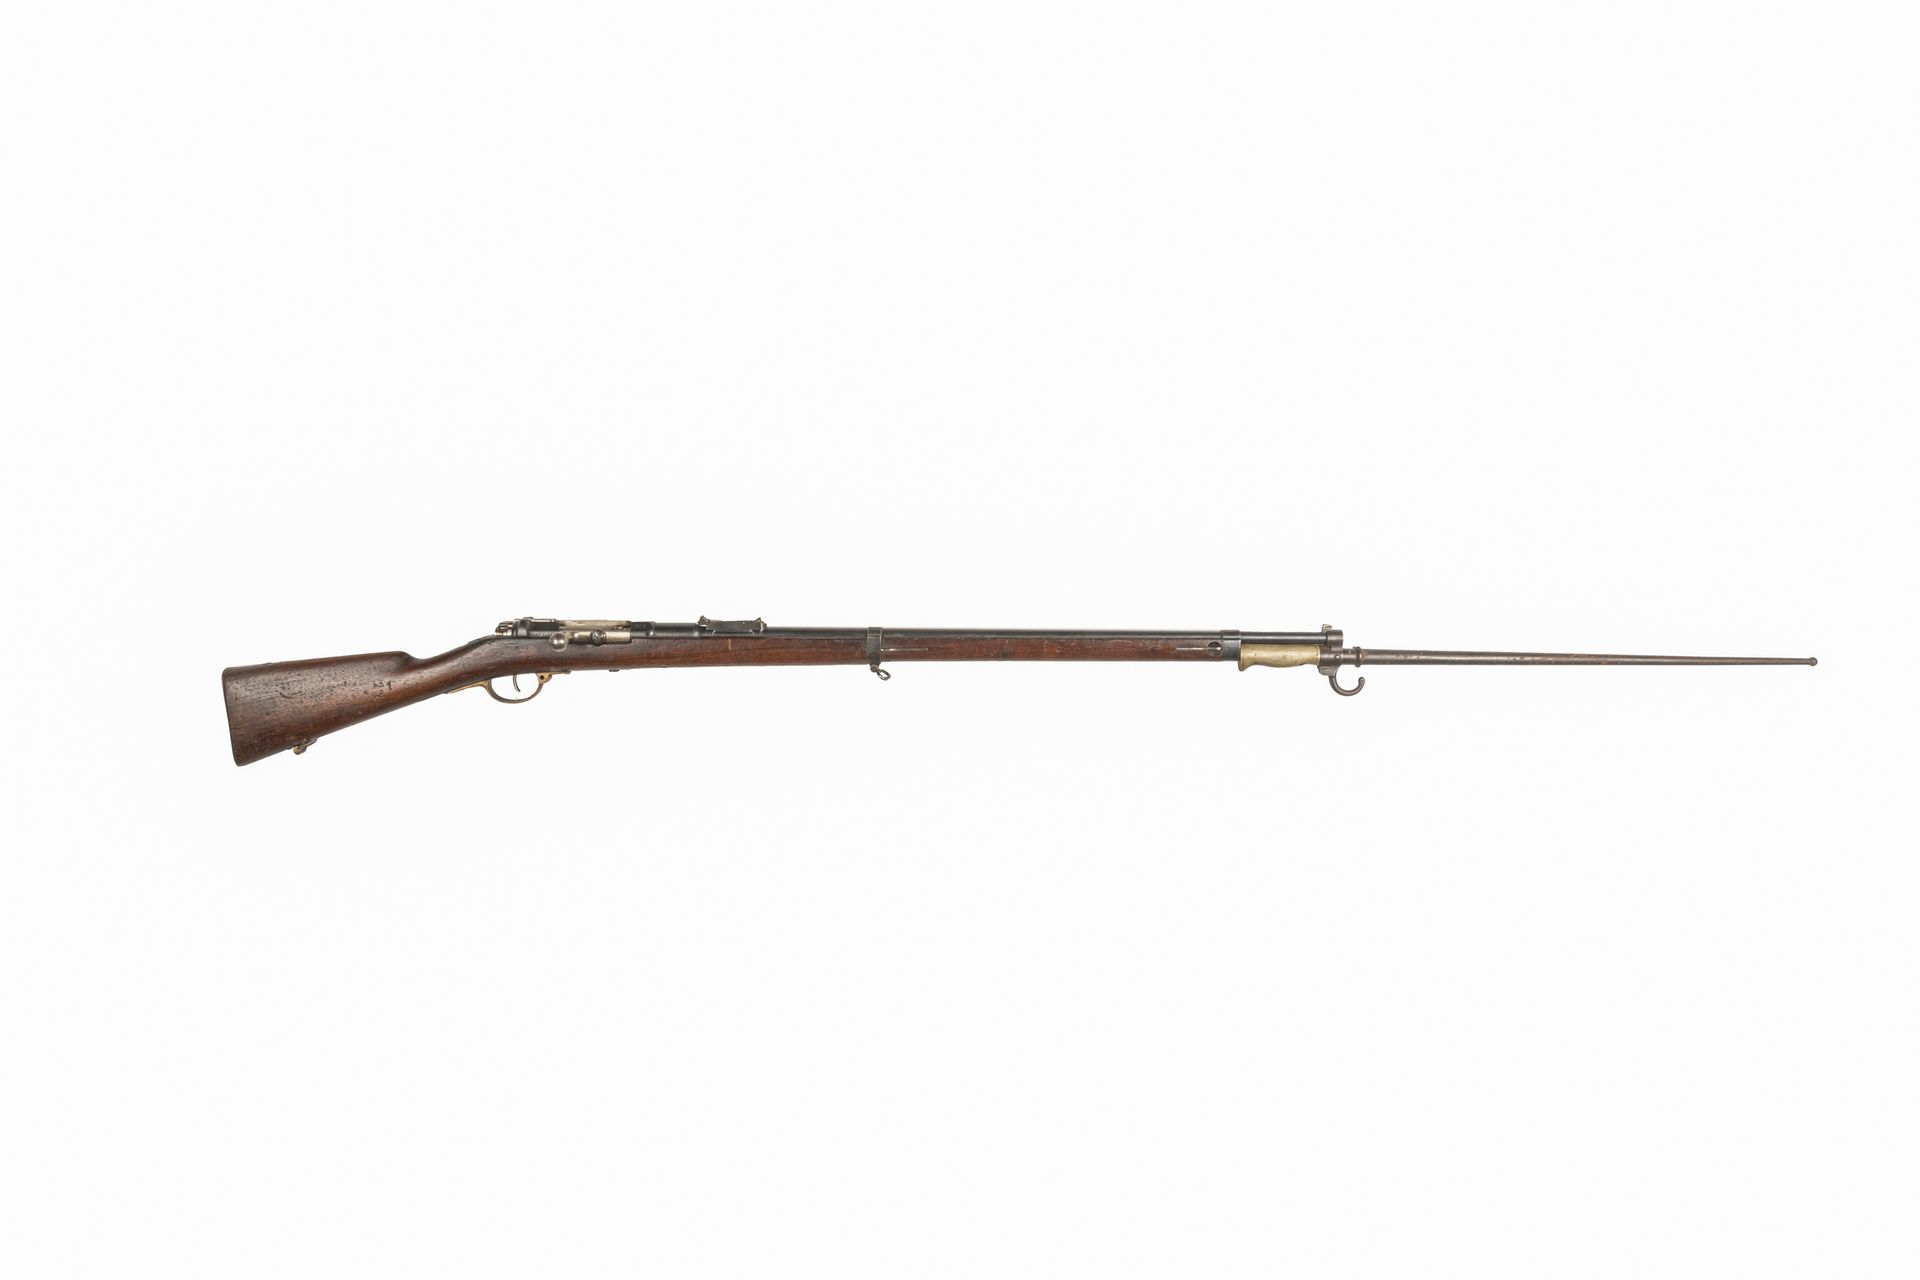 Null 多德多步枪，6.5毫米口径，由毛瑟71步枪制成。

圆形古铜色枪管，带枪托。标记的SF......ST Denis。枪托上标有 "Mod 71 "并盖&hellip;